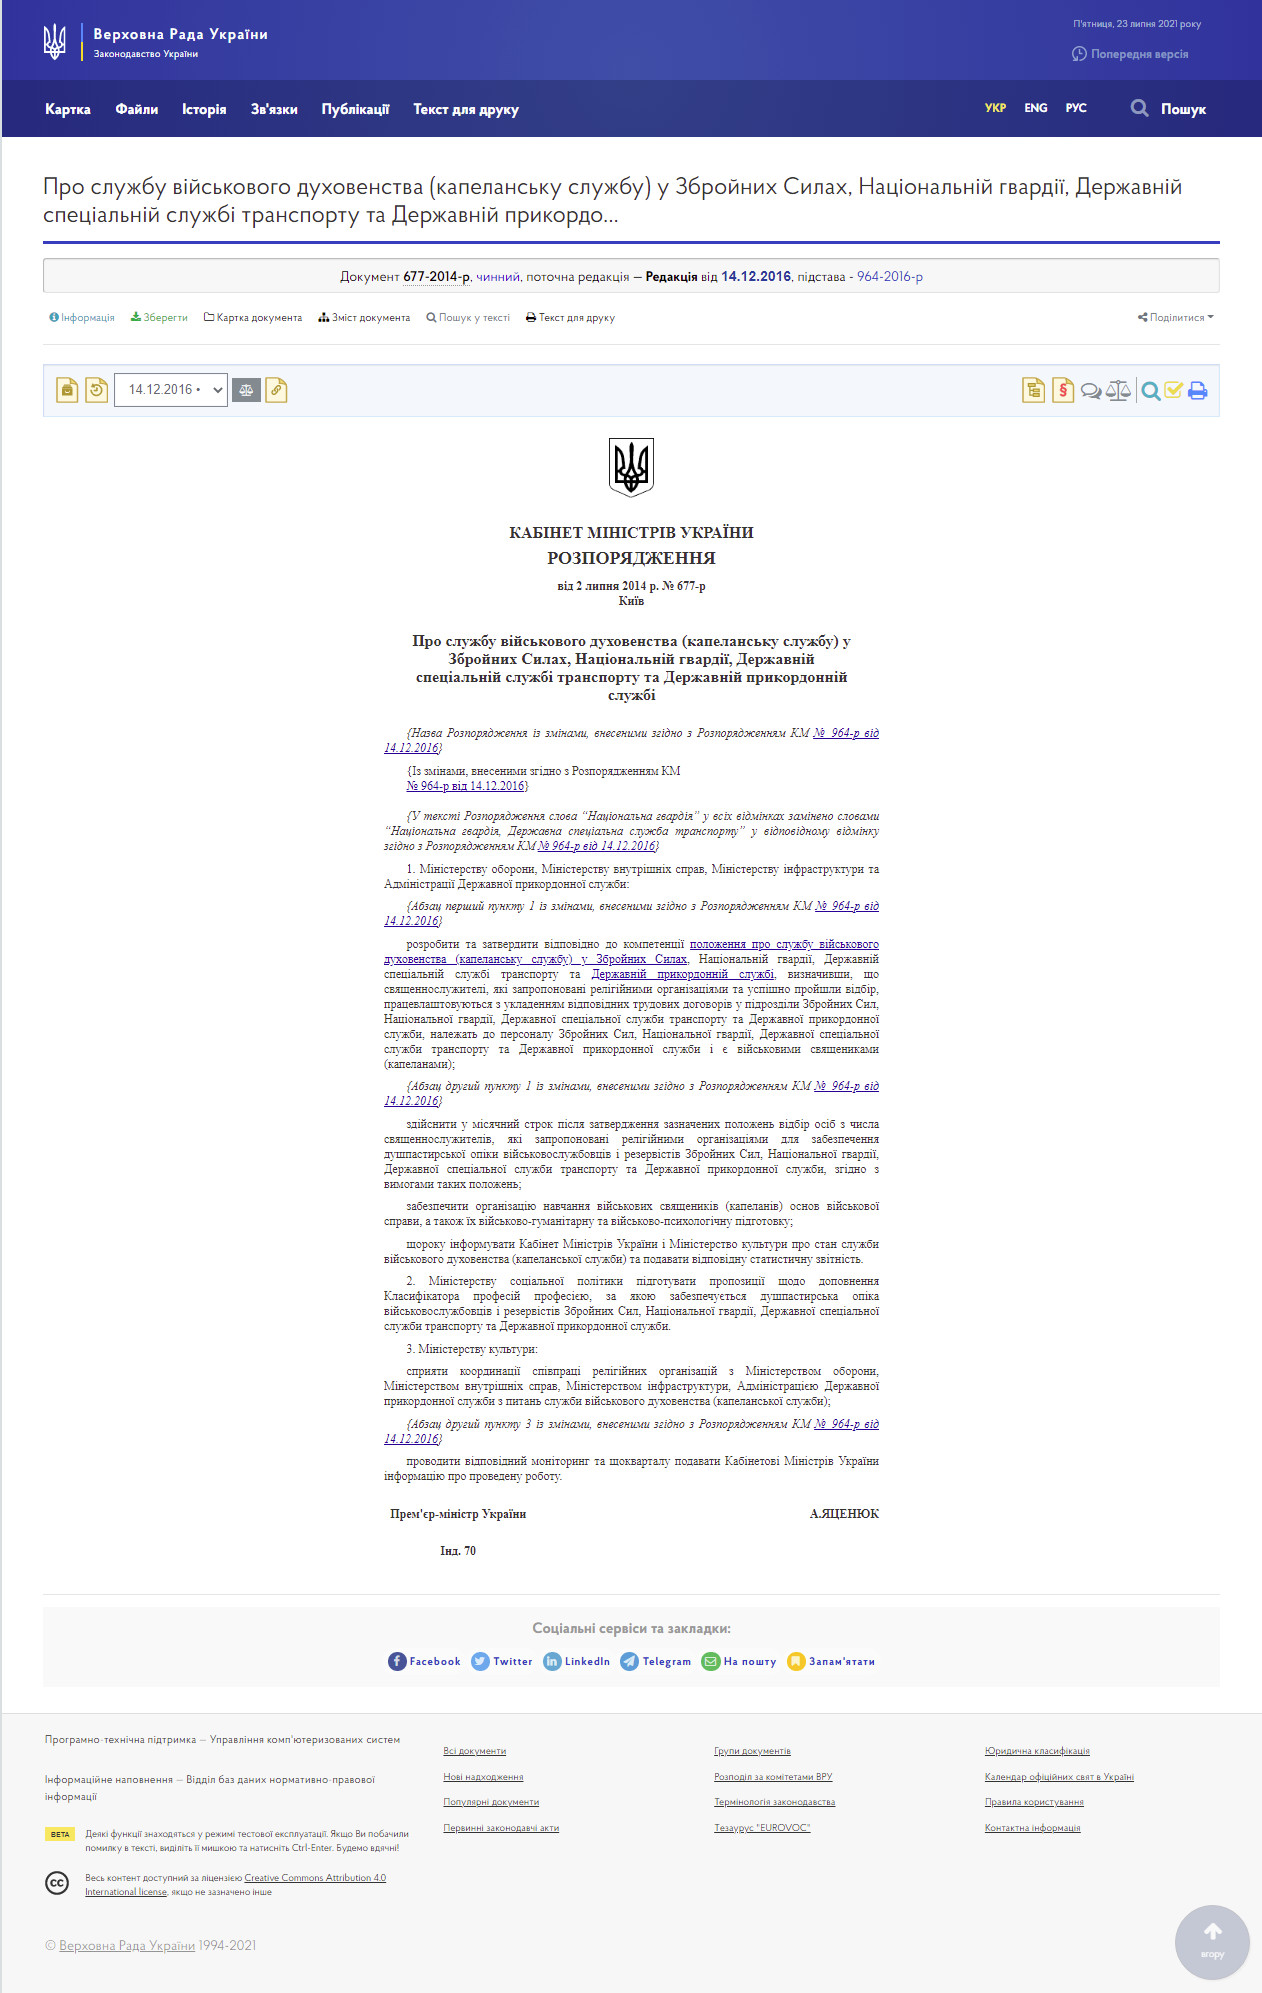 https://zakon.rada.gov.ua/laws/show/677-2014-%D1%80#Text